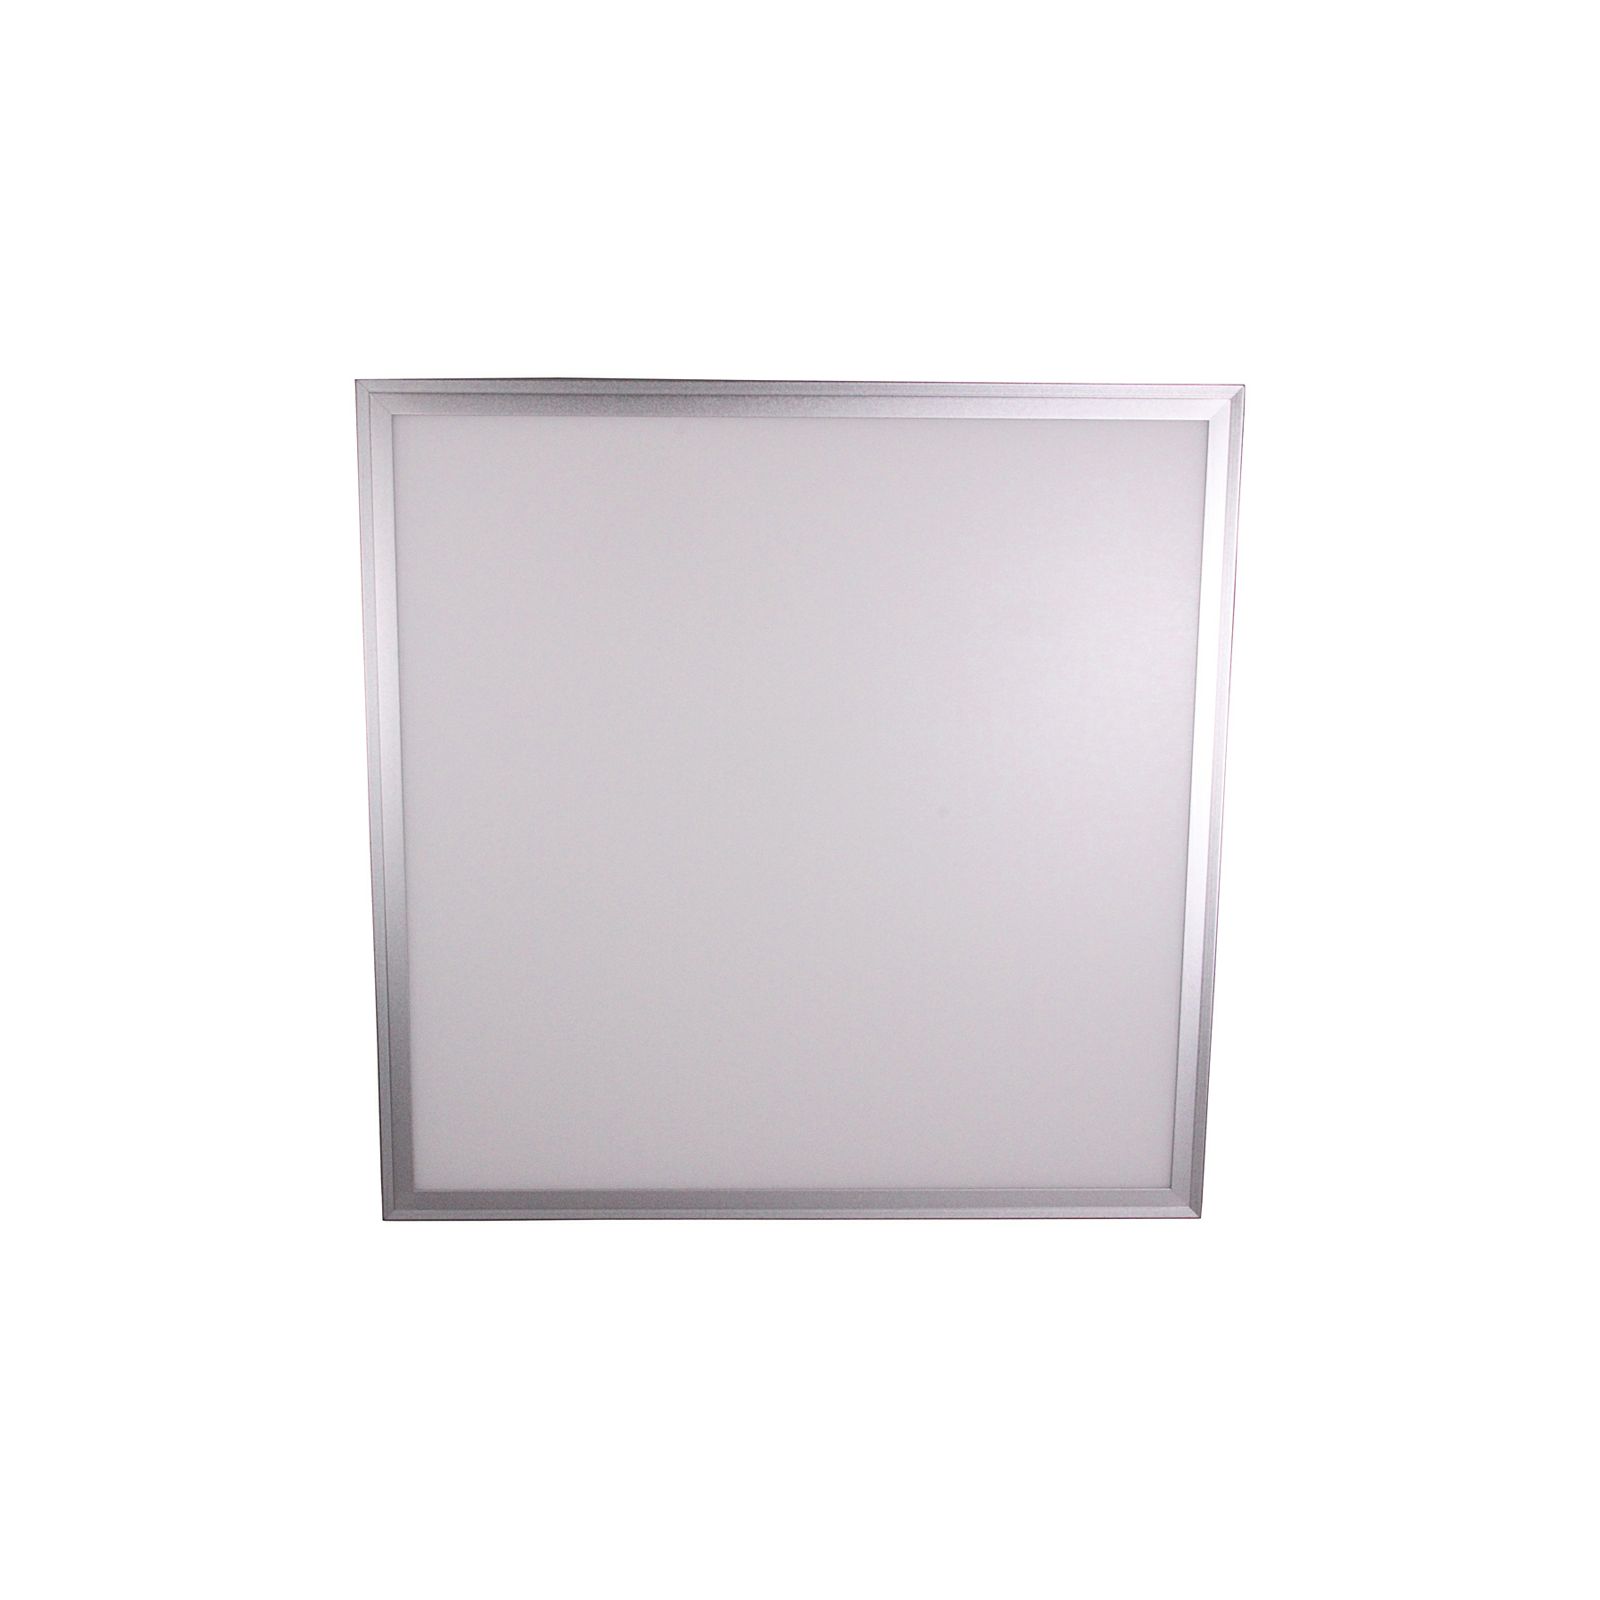 Patona LED panel 600x600x9 36W 3300lm 4000 - 4500K natur white AC 200-240V dimmable 60x60x0,9cm